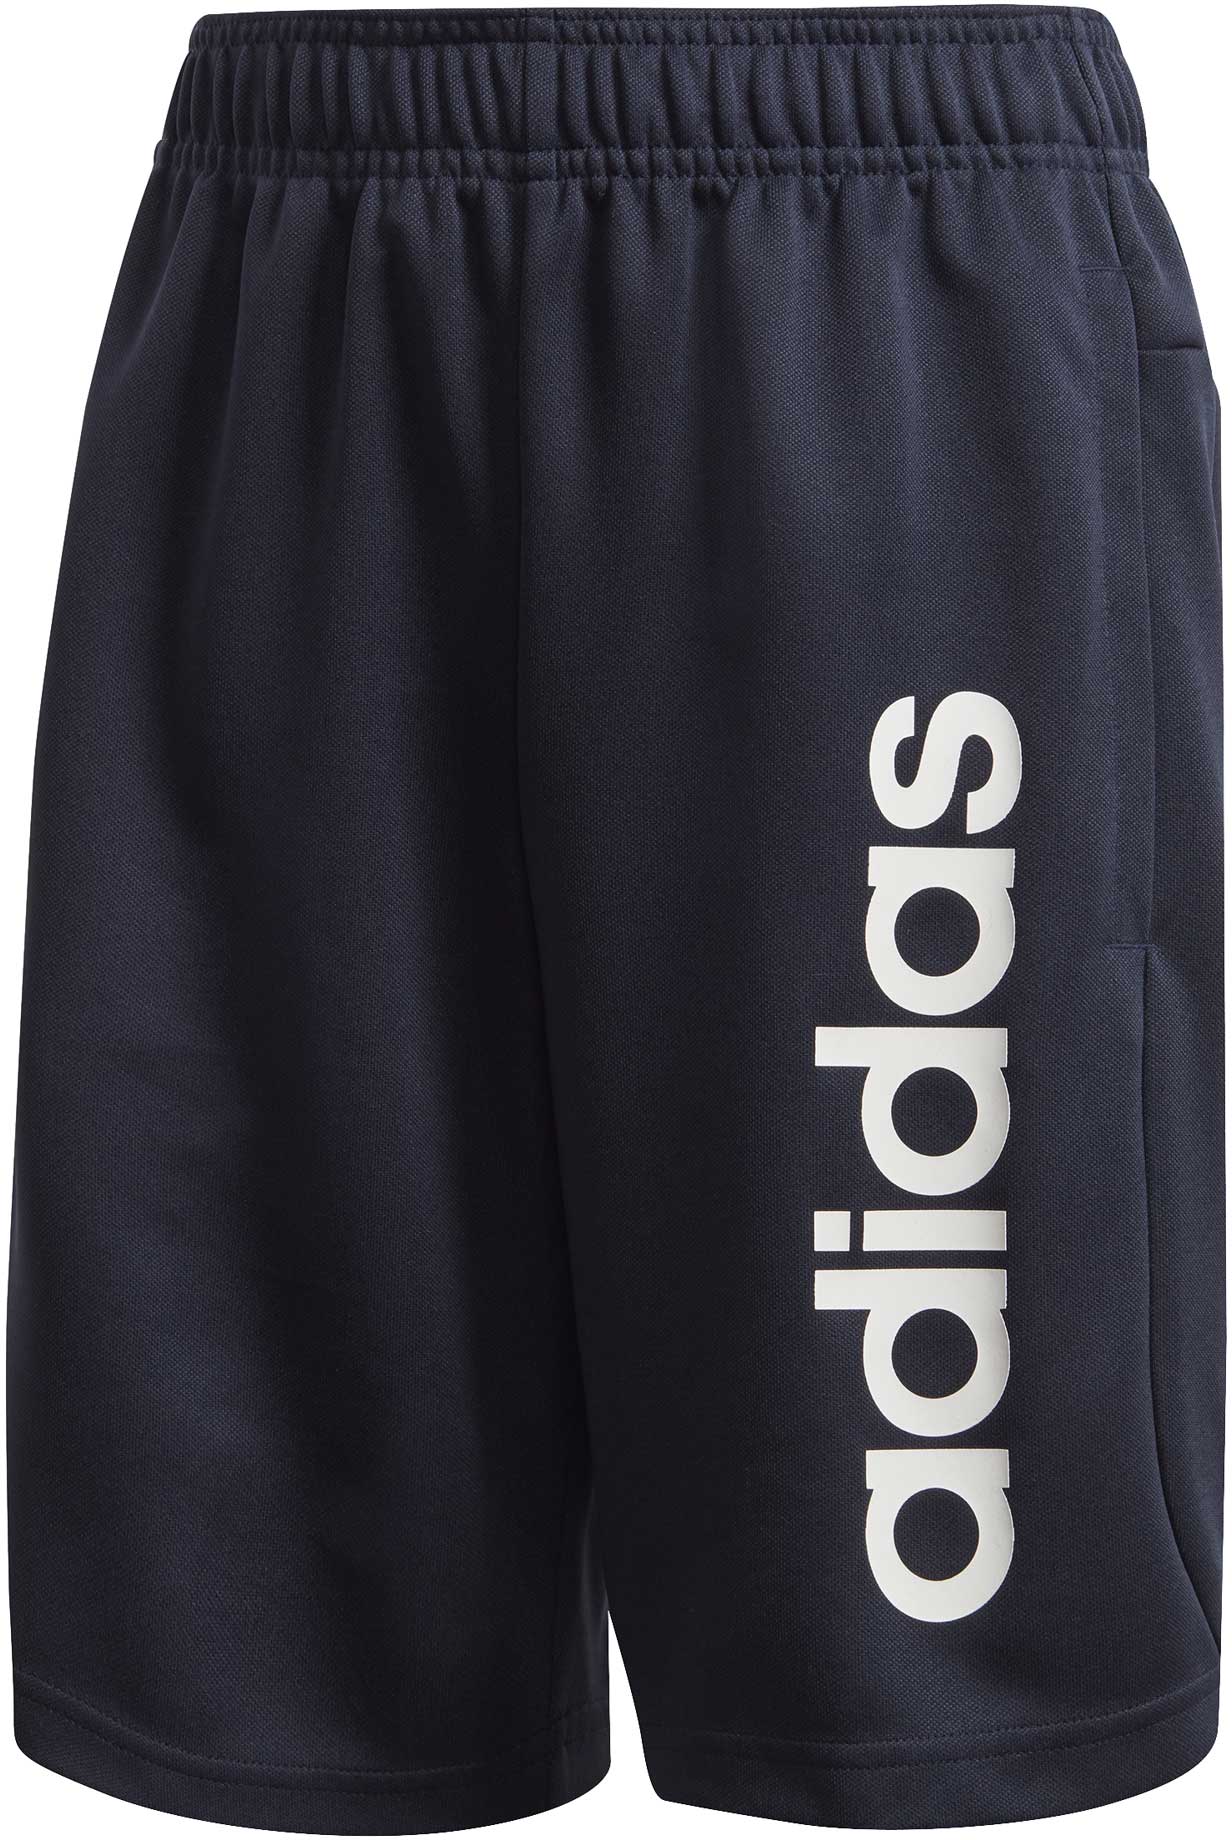 Boys' shorts